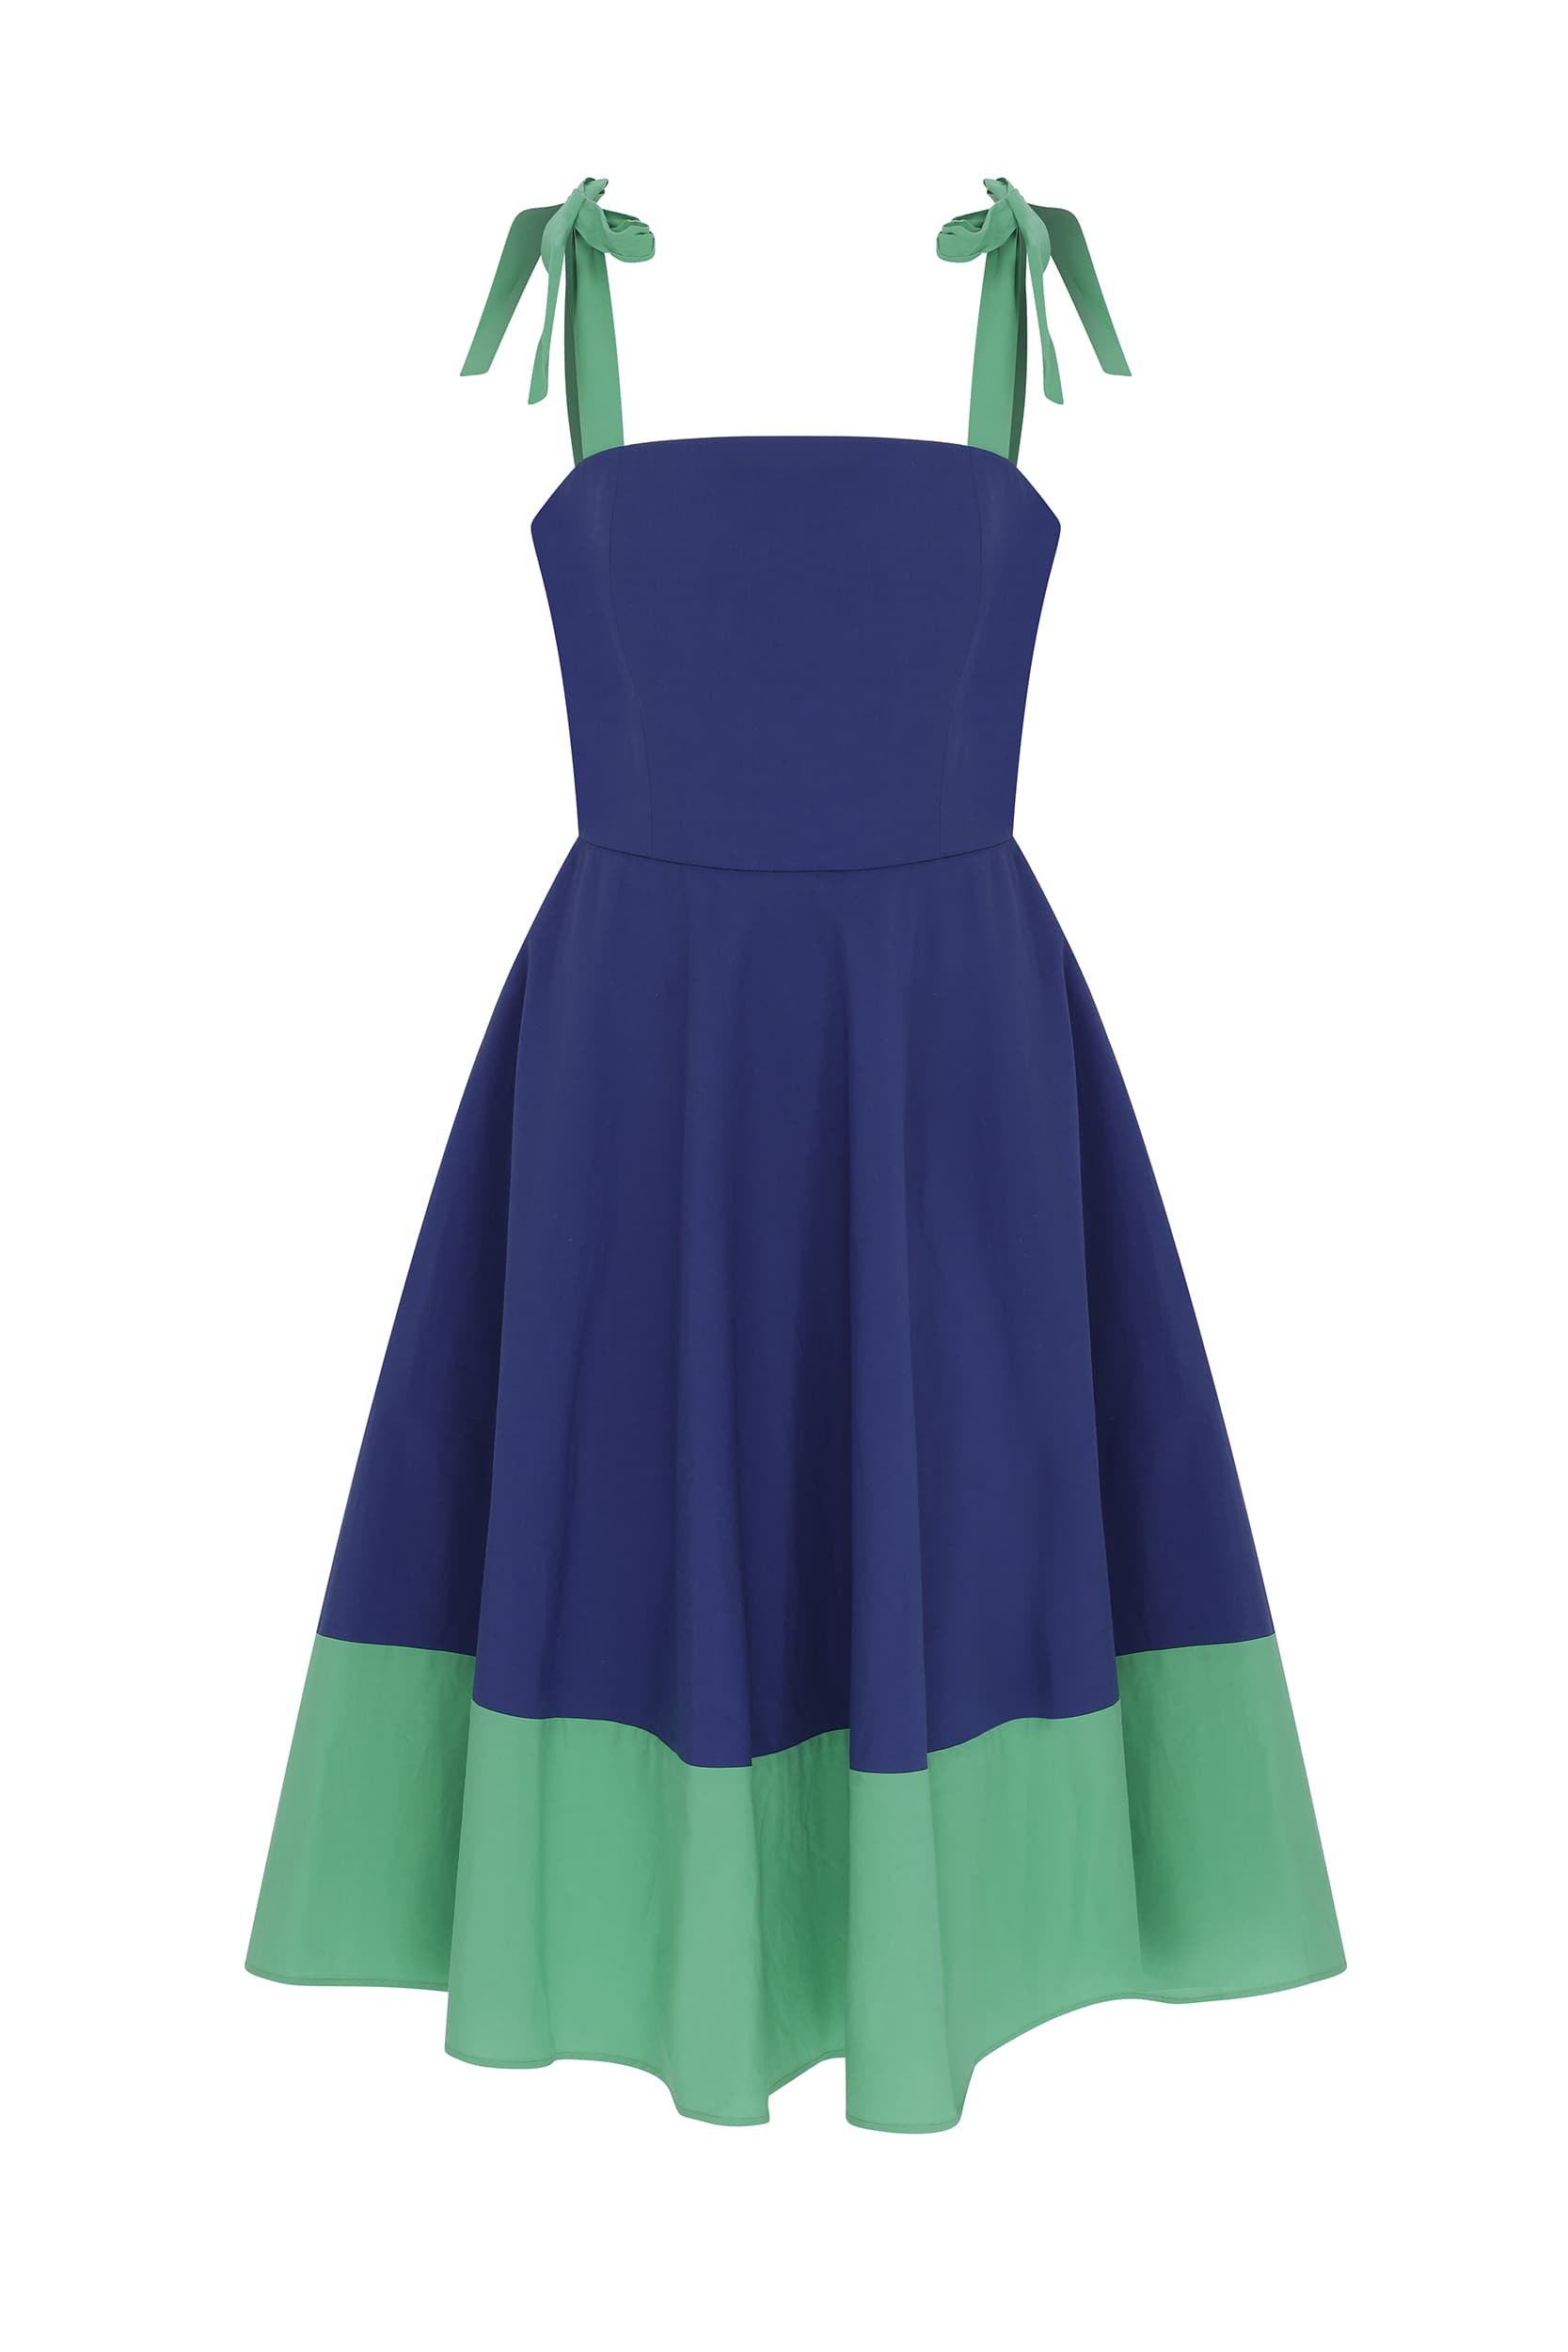 Roman Emma Blue Green Contrasting Dress. 2